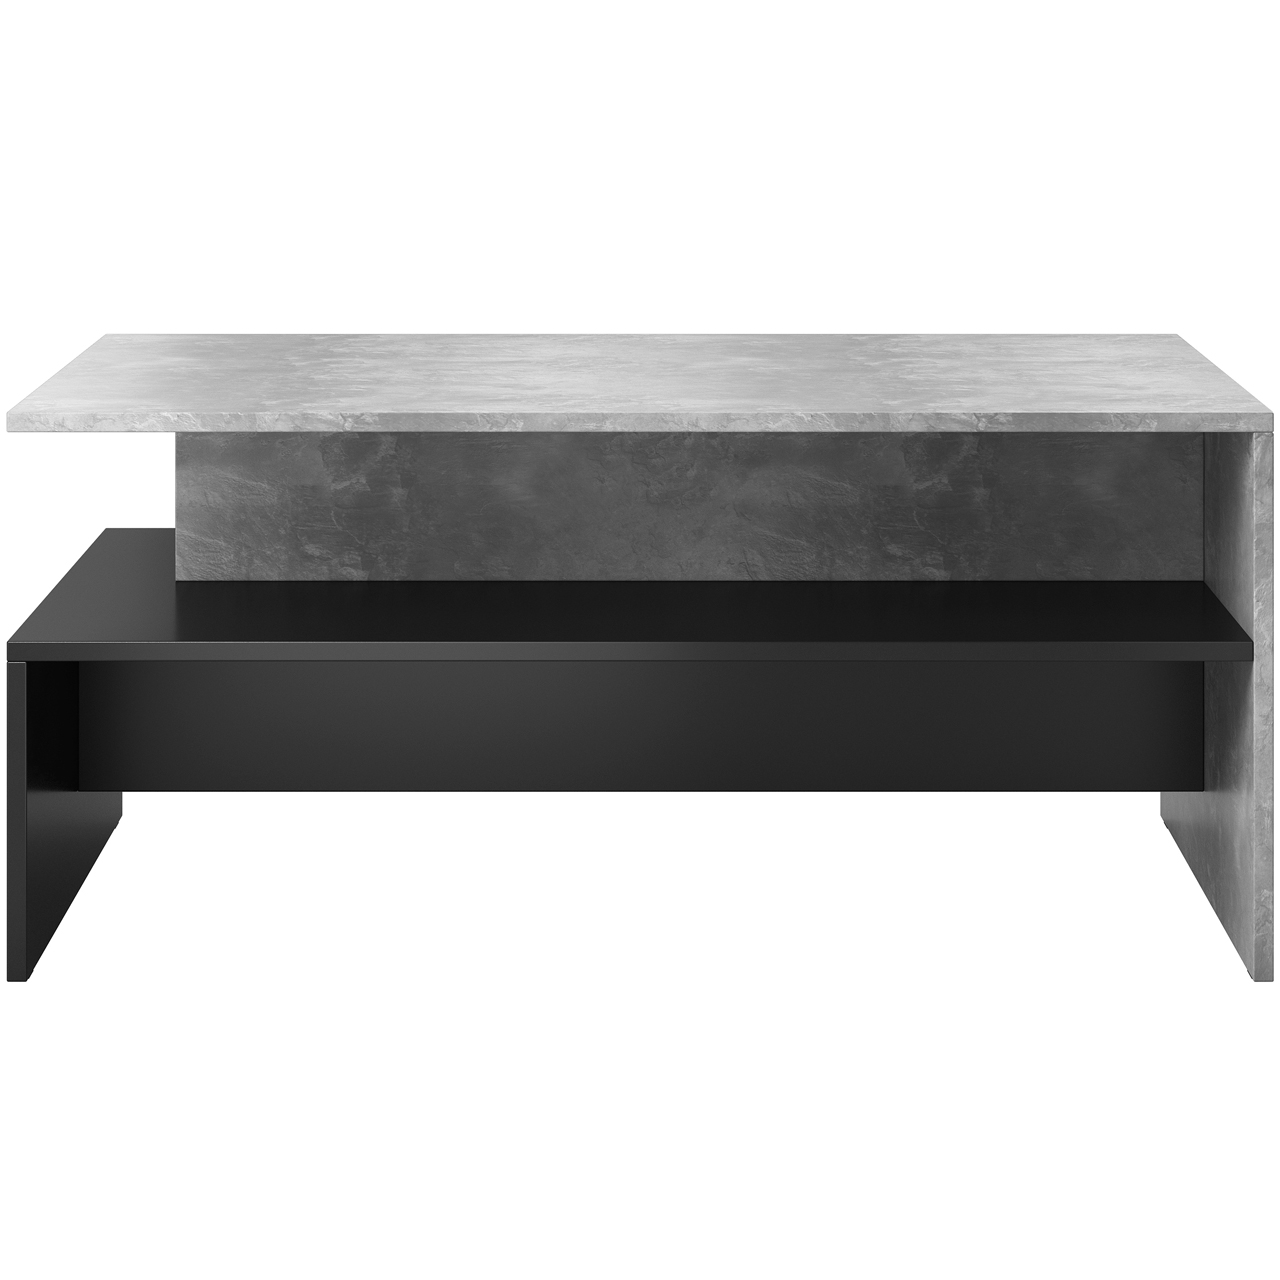 Coffee table BAROS 99 light concrete / black